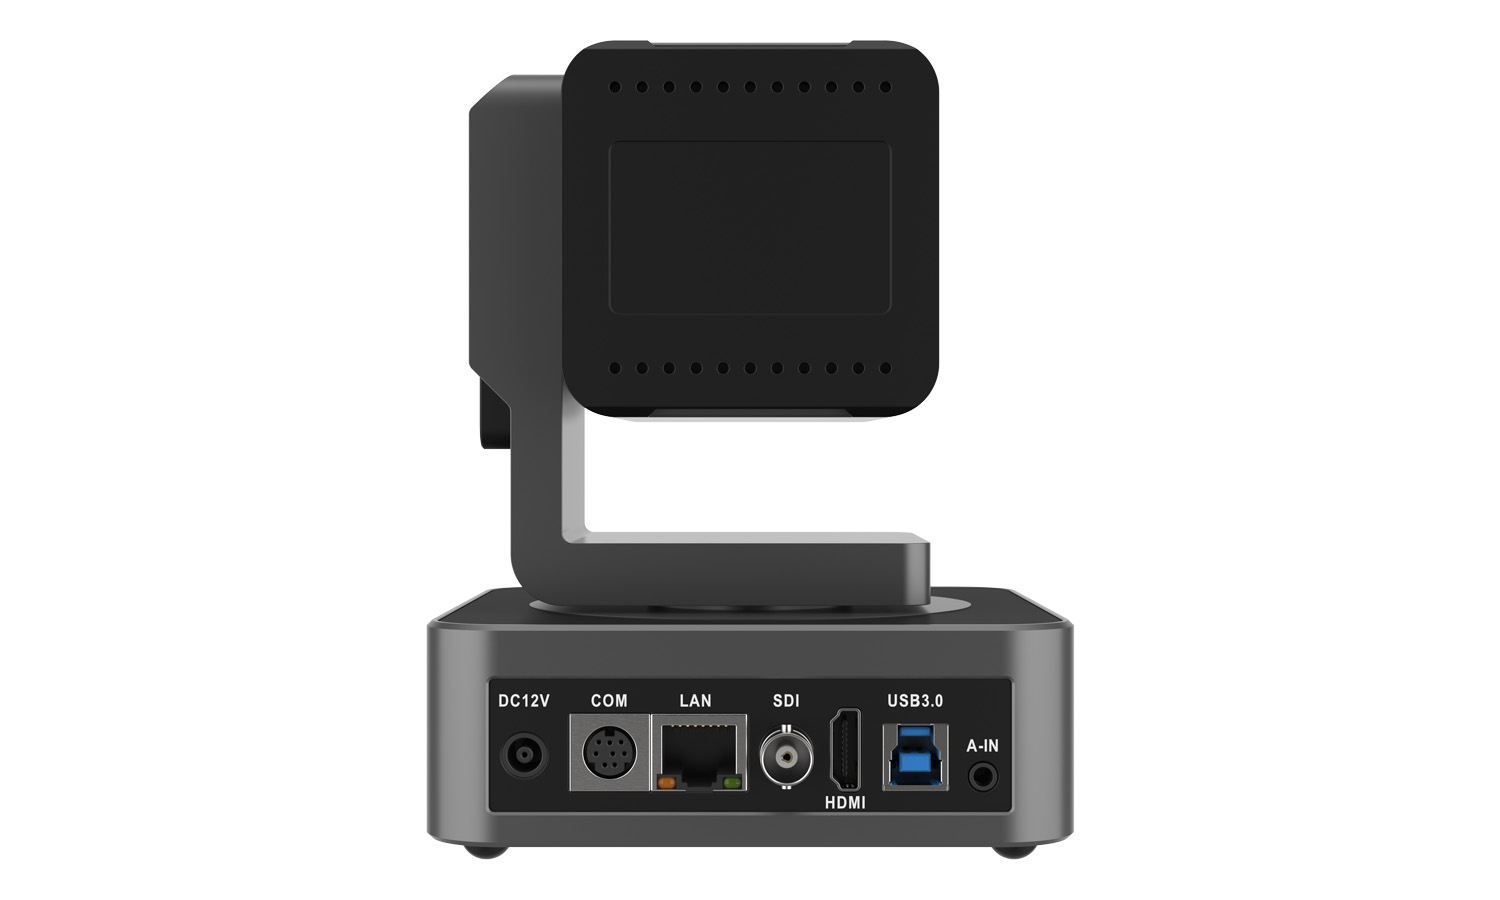 BZBGEAR BG-VPTZ-HSU3 All-In-One PTZ 1080P Full HD HDMI/SDI/USB 3.0/POE Live Streaming Camera